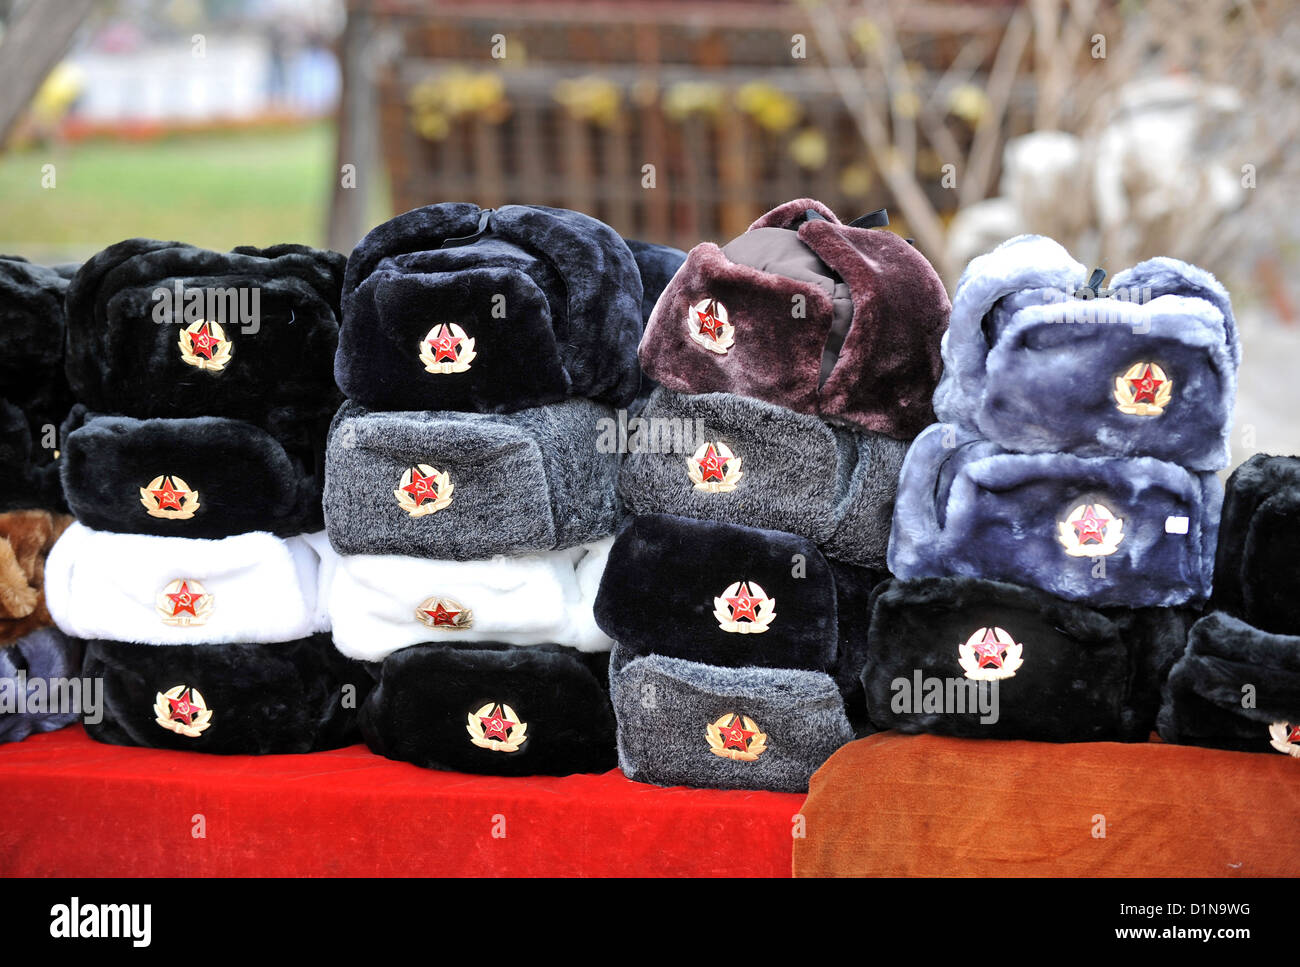 Russian fur hats or ushanka hats for sale Stock Photo